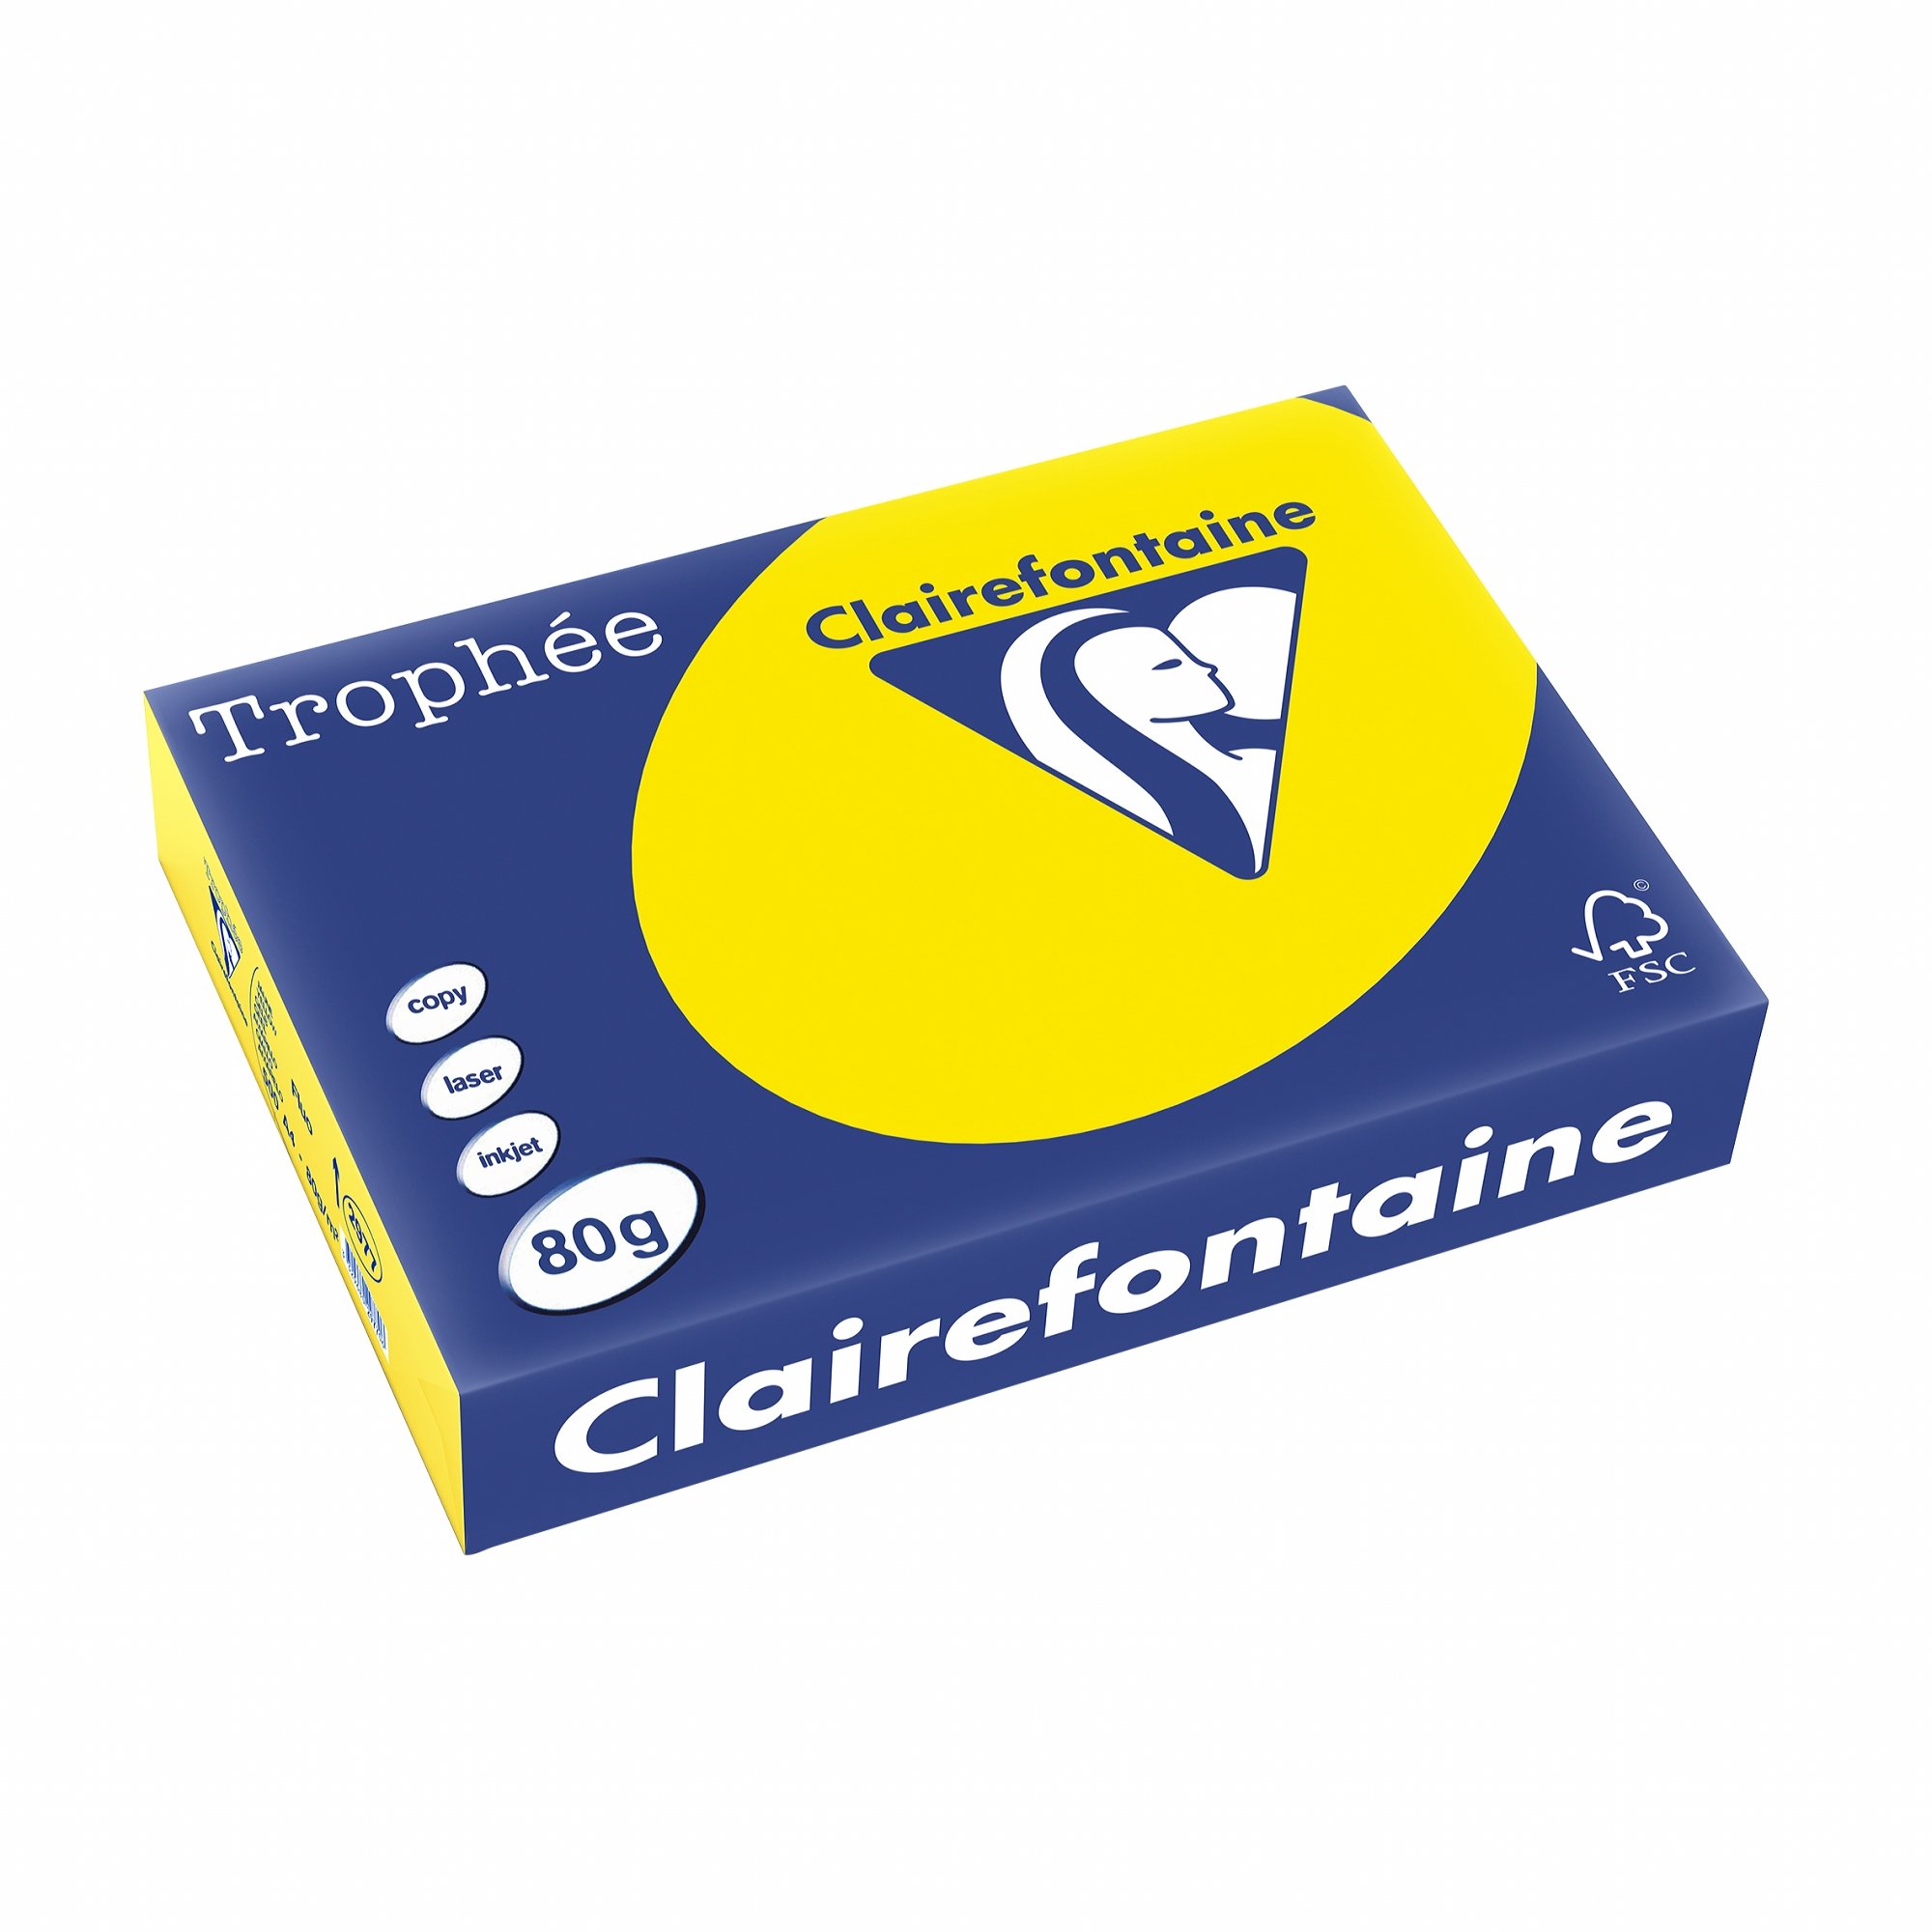 Clairefontaine 2977C - Ries Druckerpapier / Kopierpapier Trophee, intensive Farben, DIN A4, 80g, 500 Blatt, Neon Gelb, 1 Ries